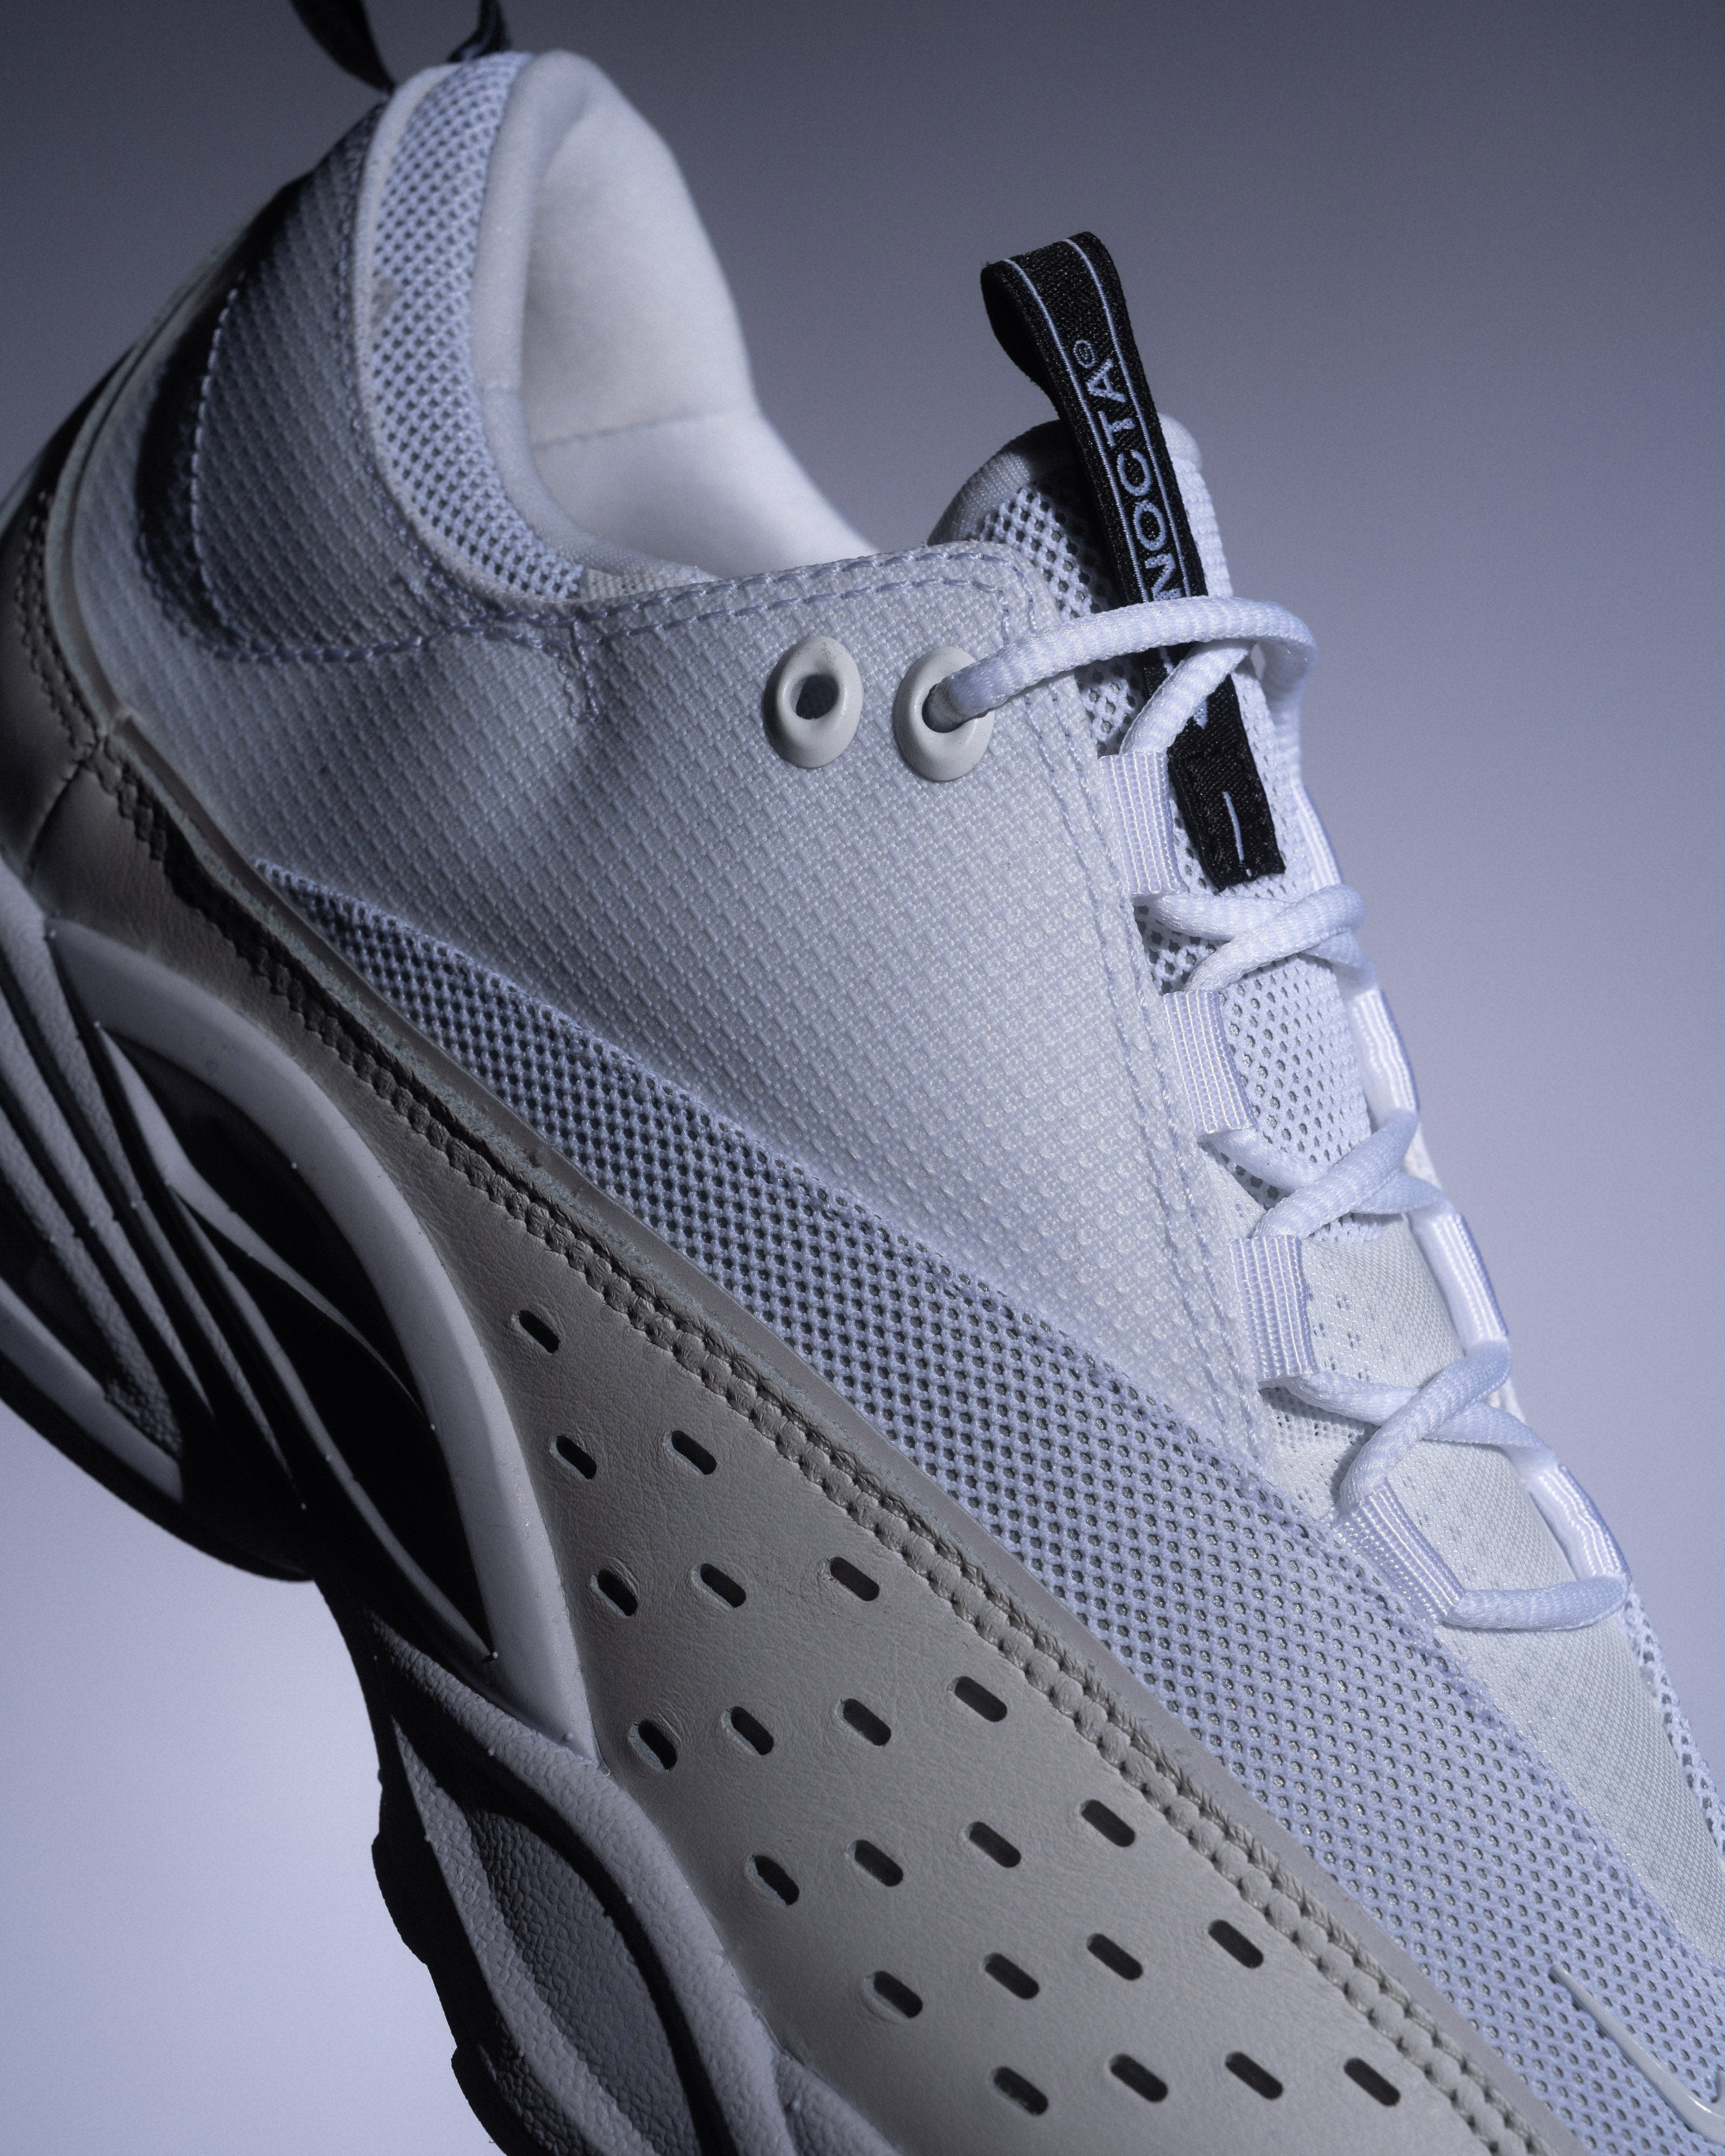 Perneiras para coxa Nike Pro Combat Thigh Sleeve 2.0 preto branco